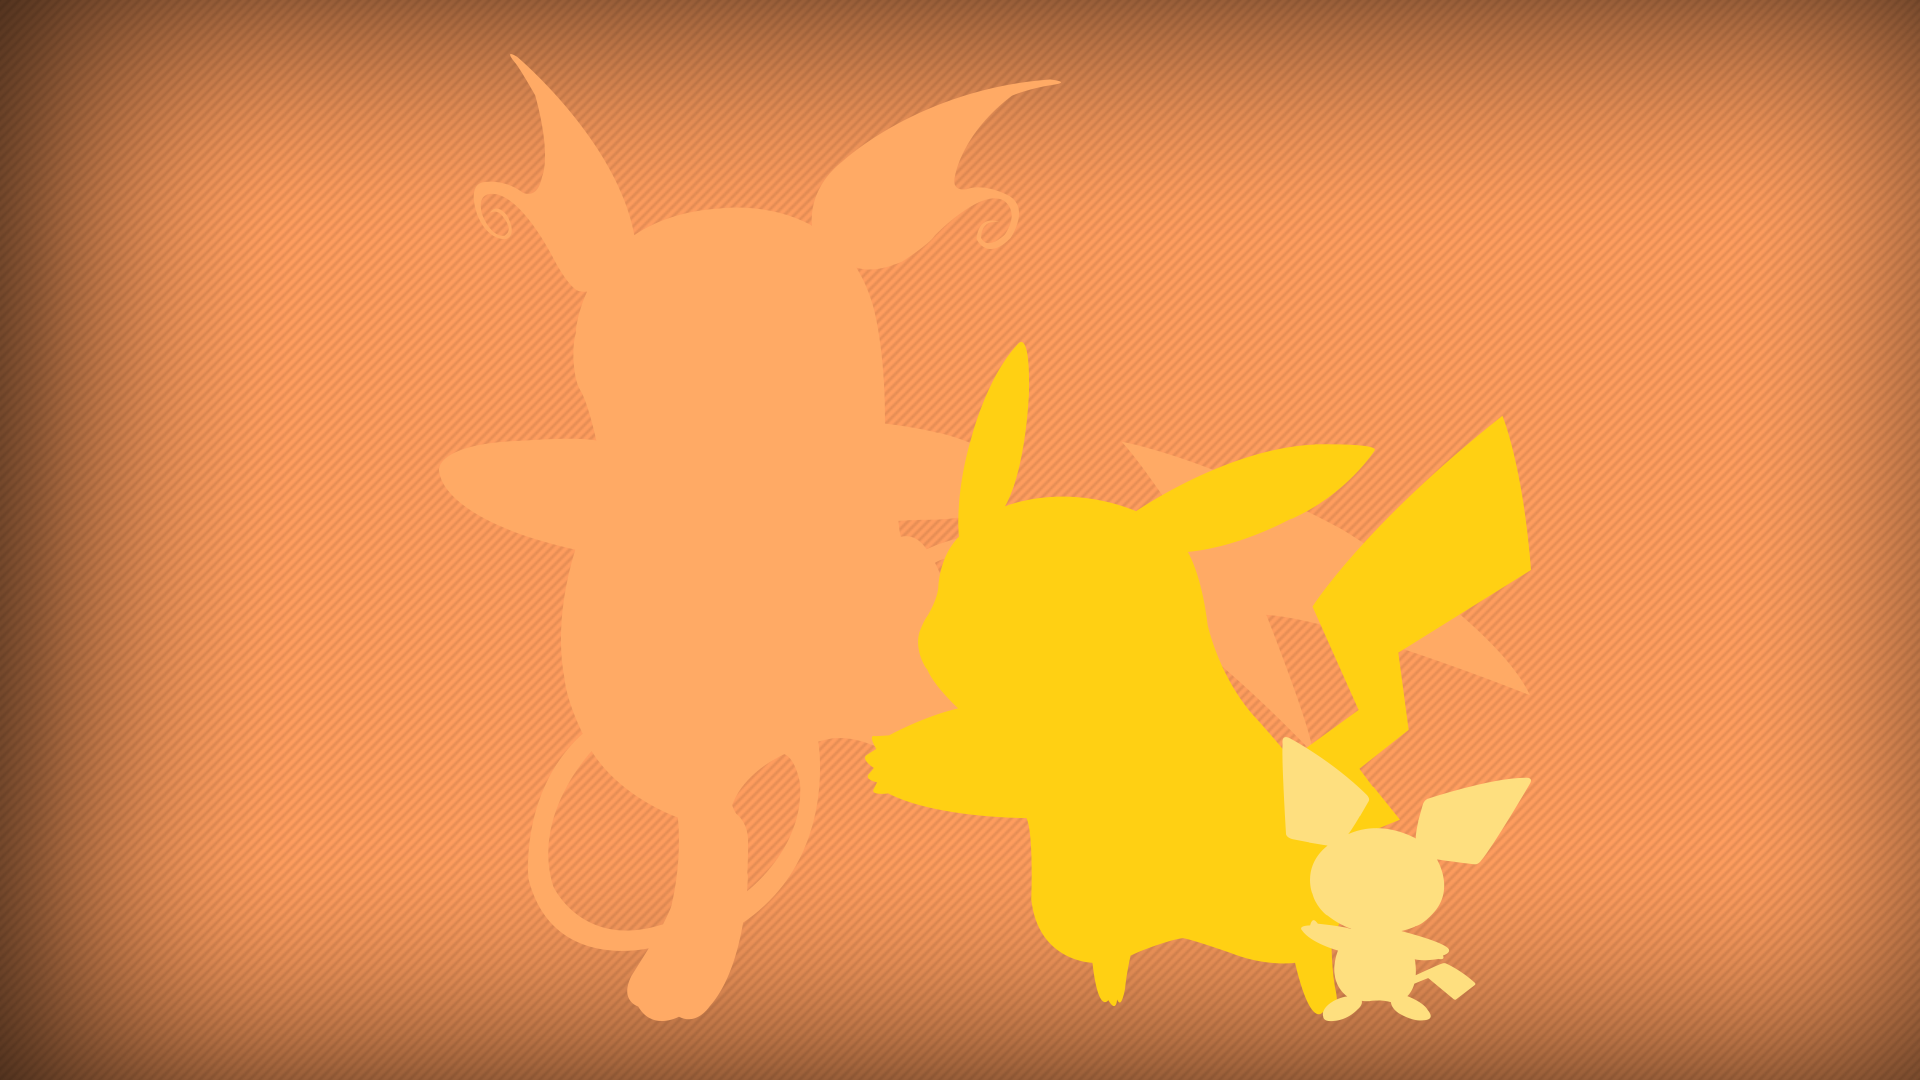 Pikachu Evolution (Shiny) by Bhrunno on DeviantArt